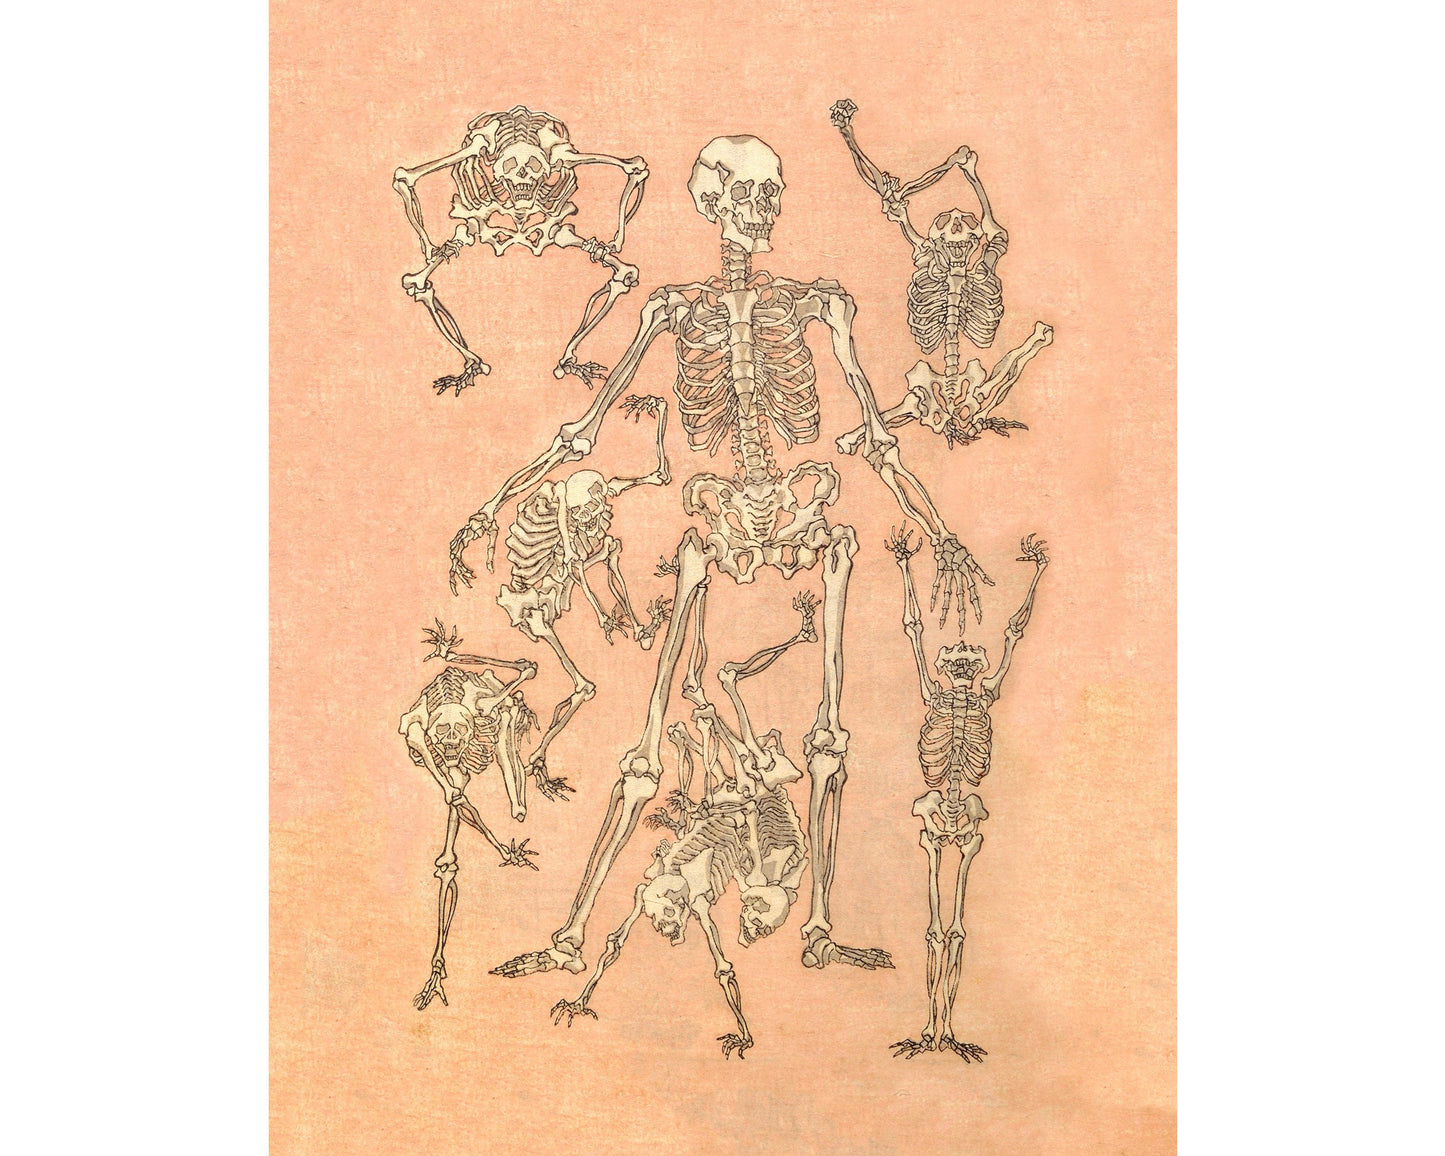 Vintage skeleton art | Kawanabe Kyosai sketch | 19th century Asian | Human anatomy print | Modern vintage décor | Eco-friendly gift